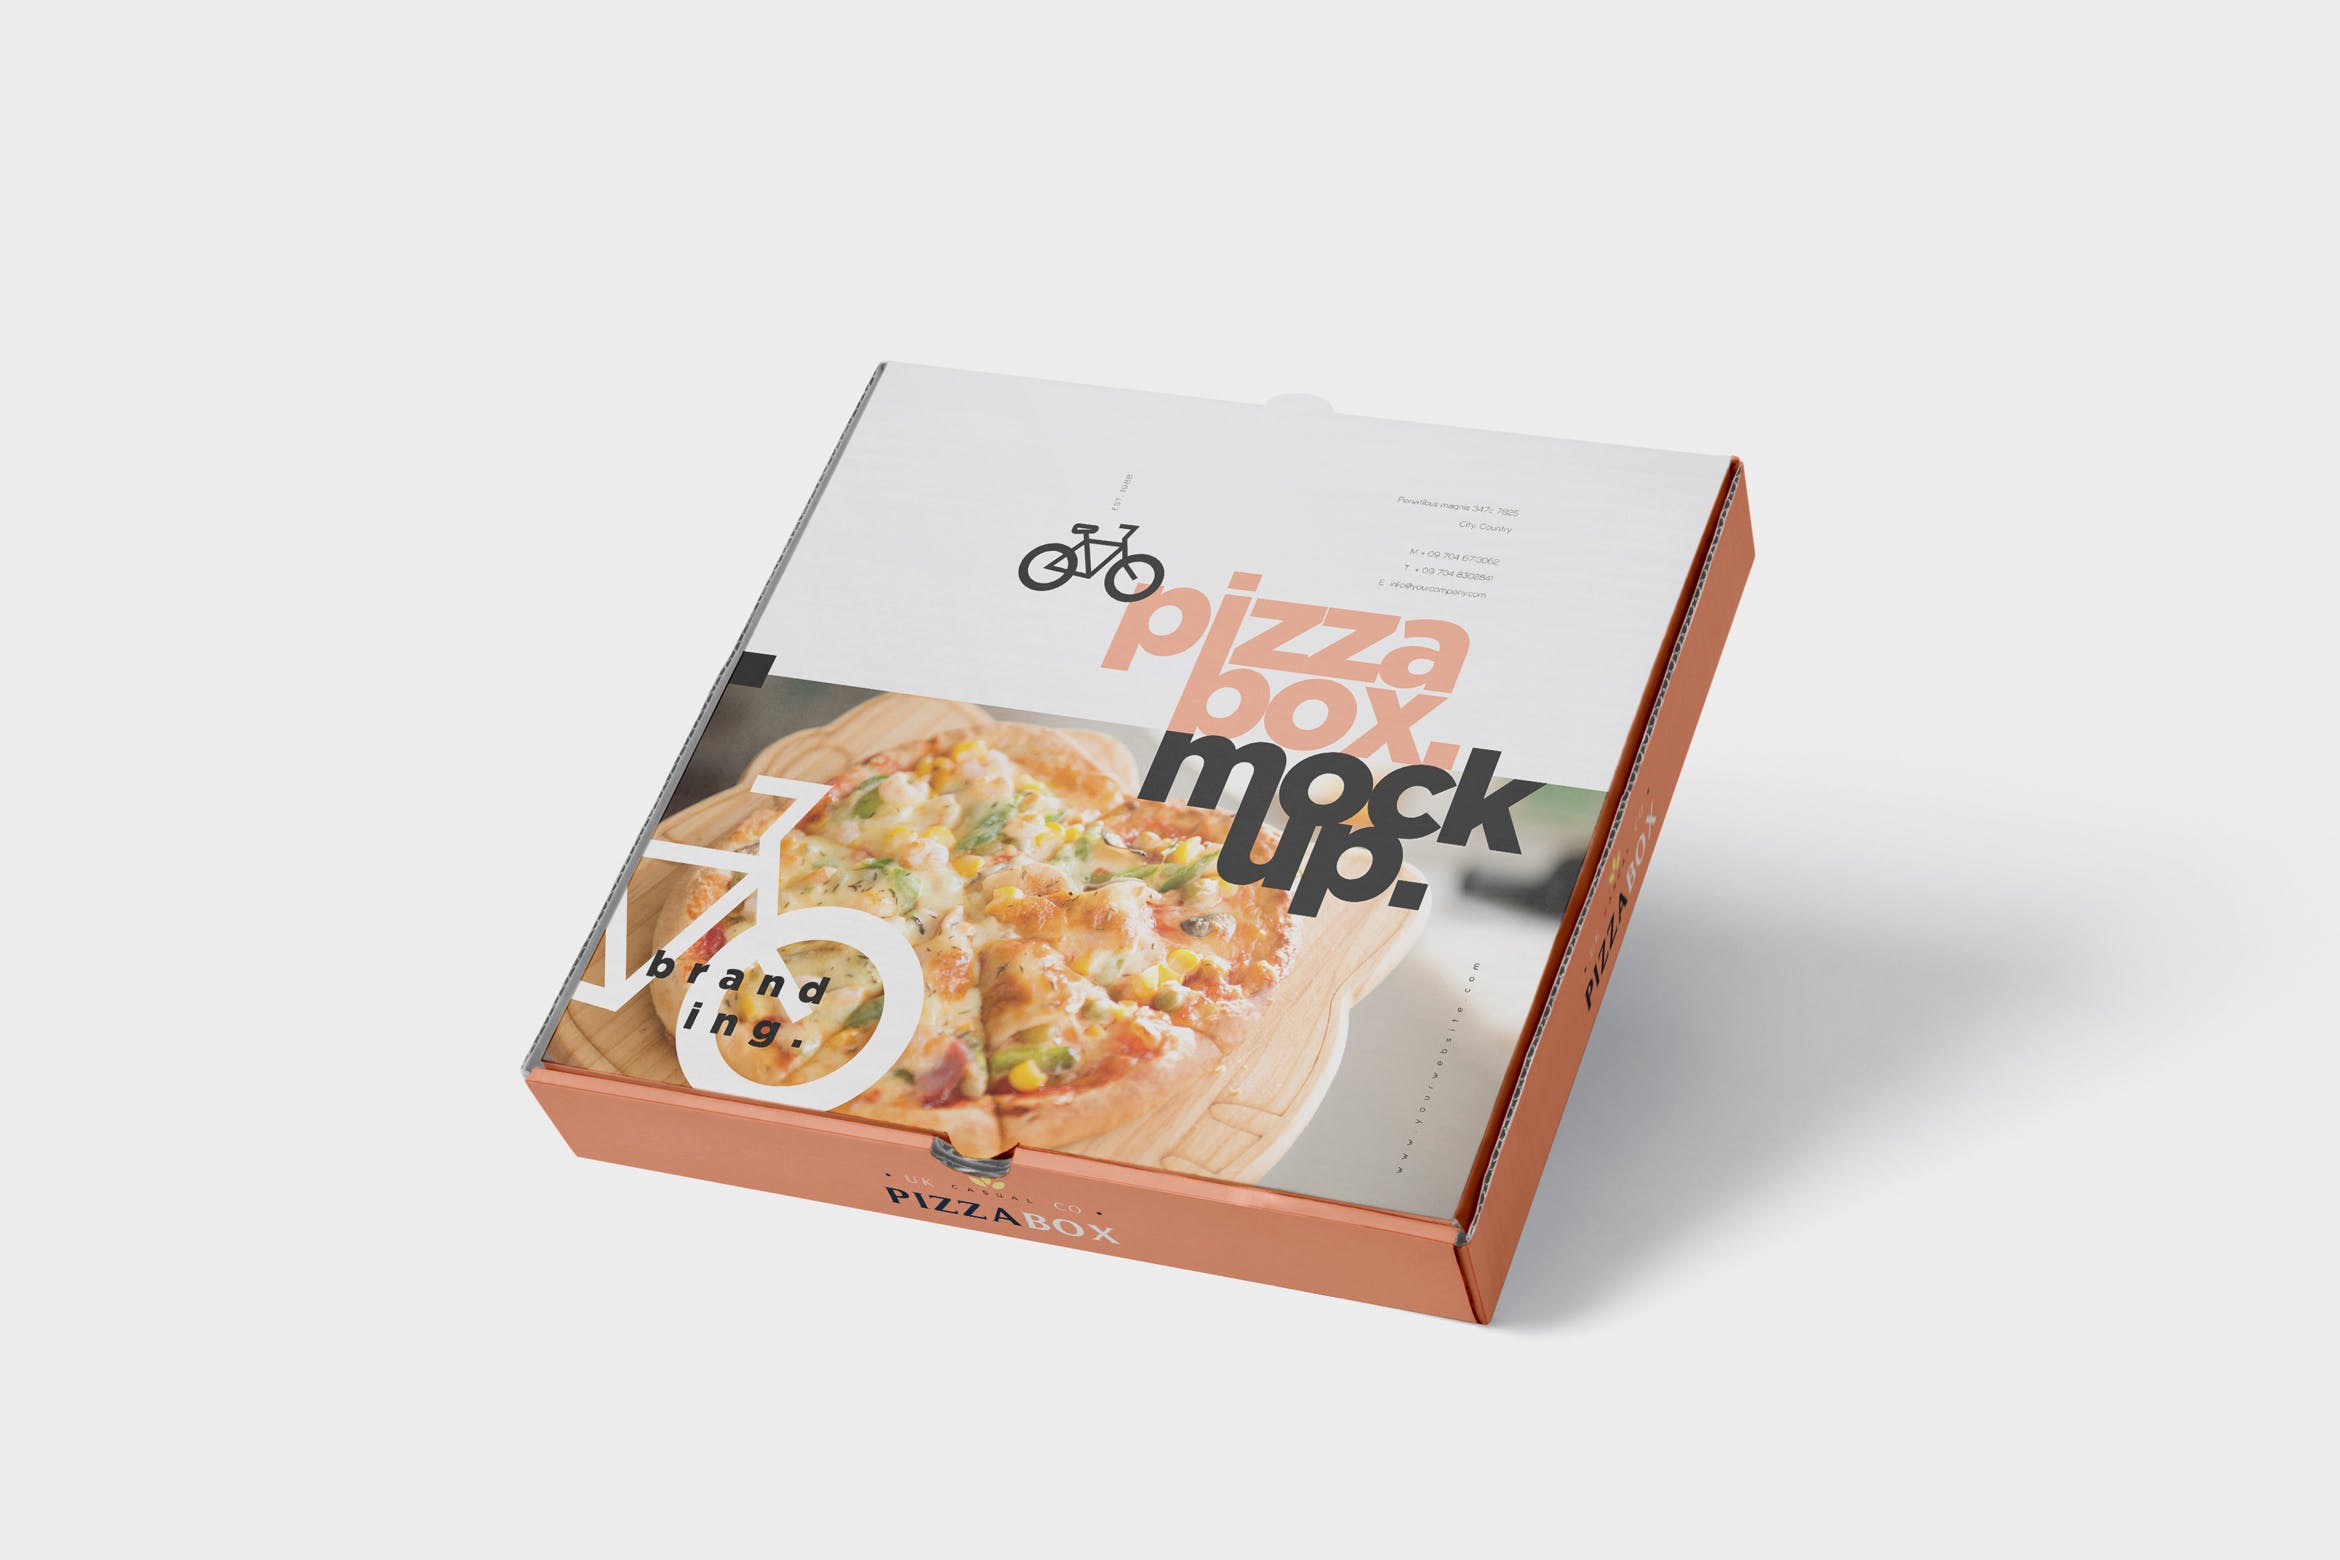 披萨外带包装纸盒设计图样机 Pizza Box Mock-Up – Grocery Store Edition插图